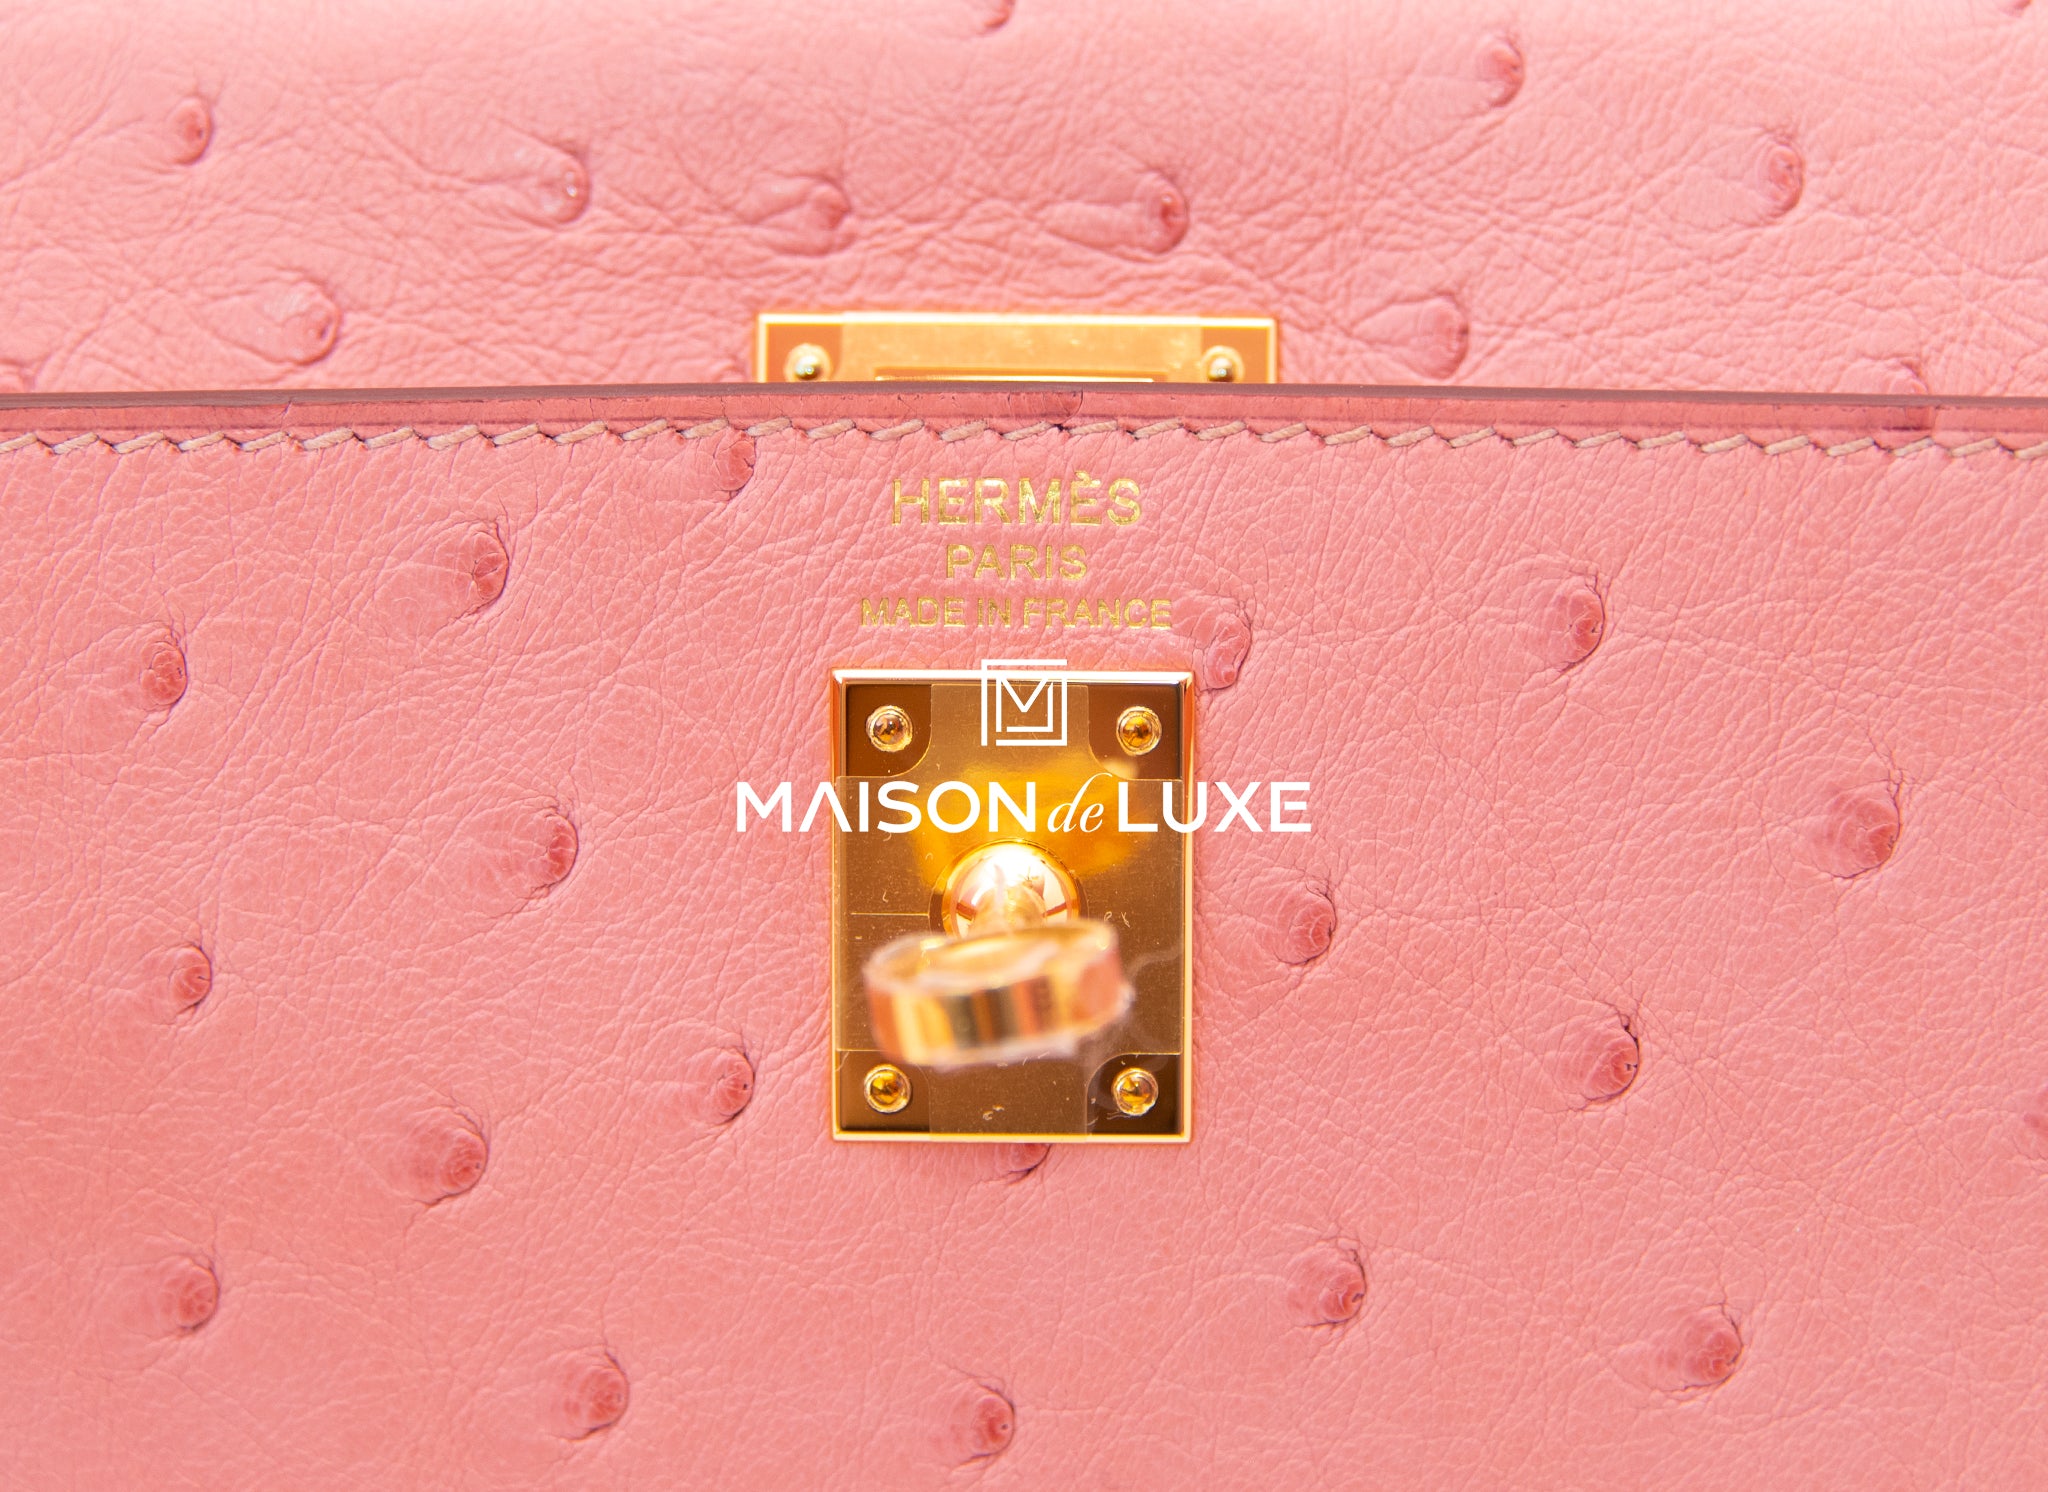 Hermes Kelly Sellier 25 Terre Cuite Ostrich Gold Hardware Handbag